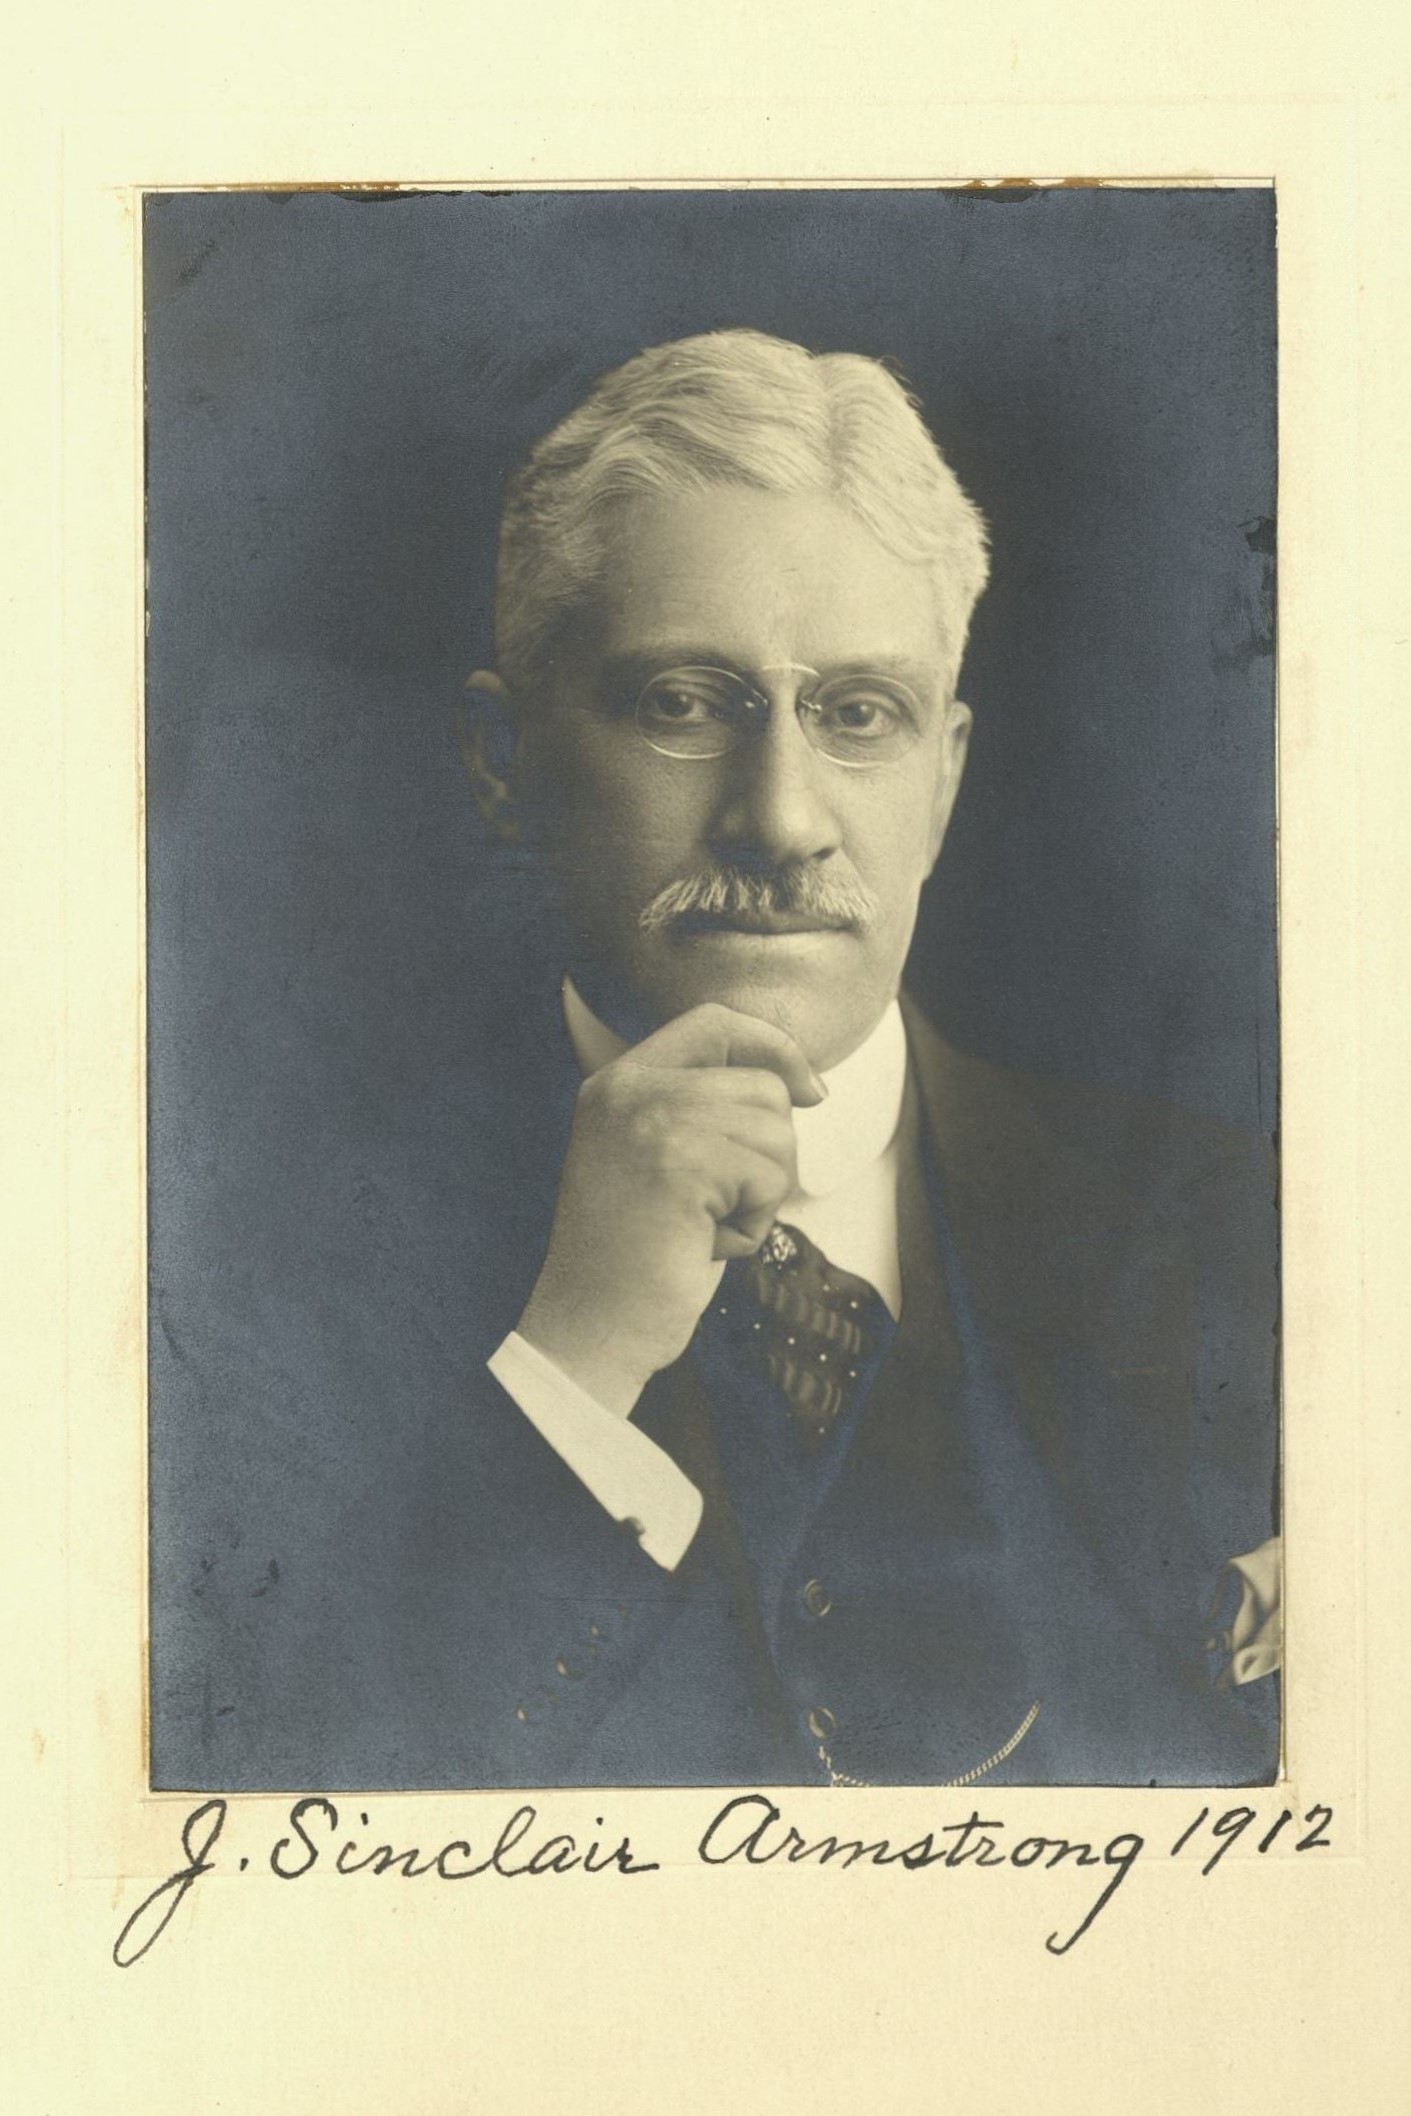 Member portrait of J. Sinclair Armstrong